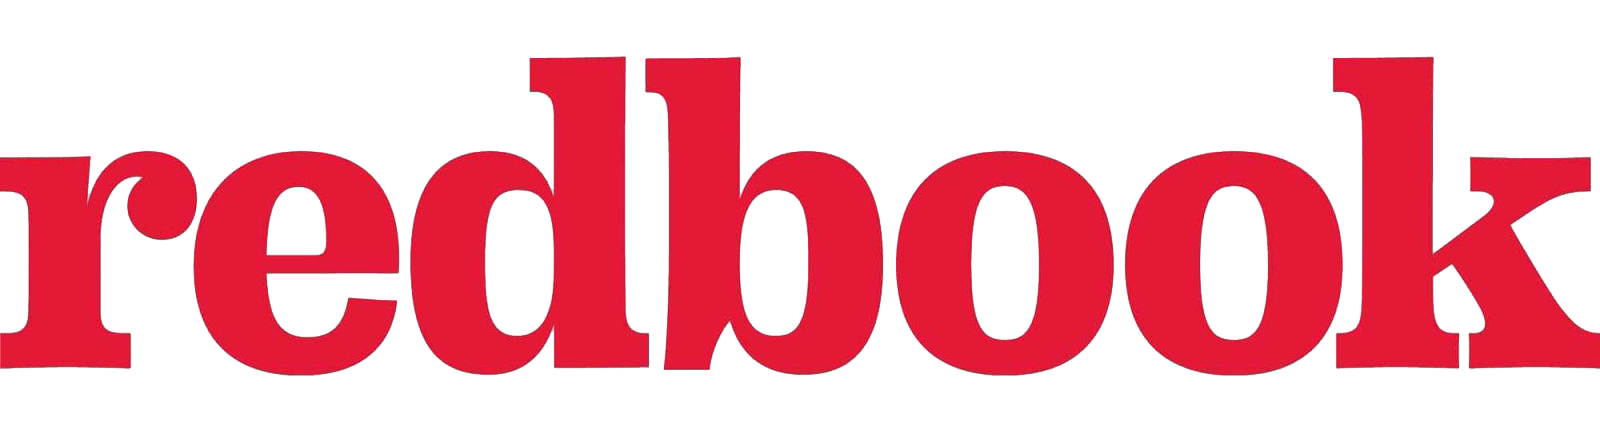 redbook-magazine-logo.png